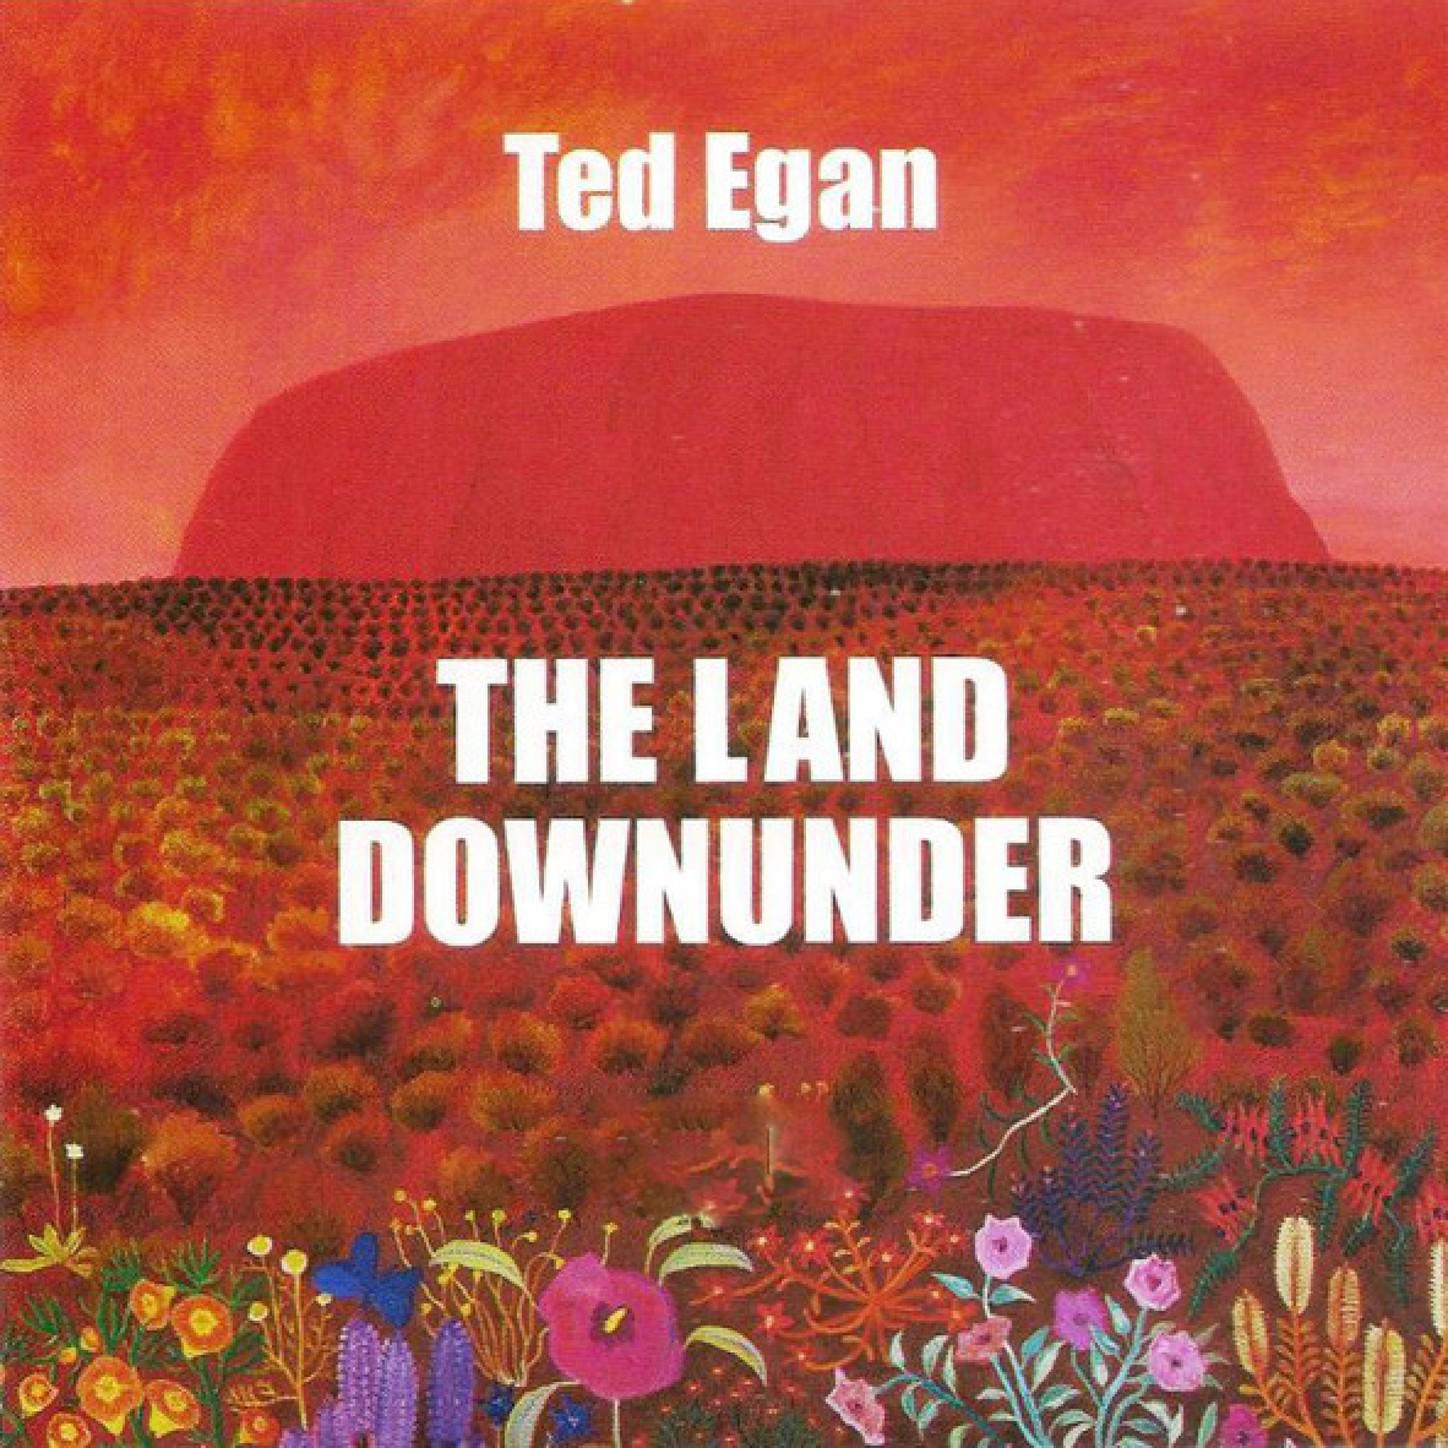 Ted Egan - Alayndabu